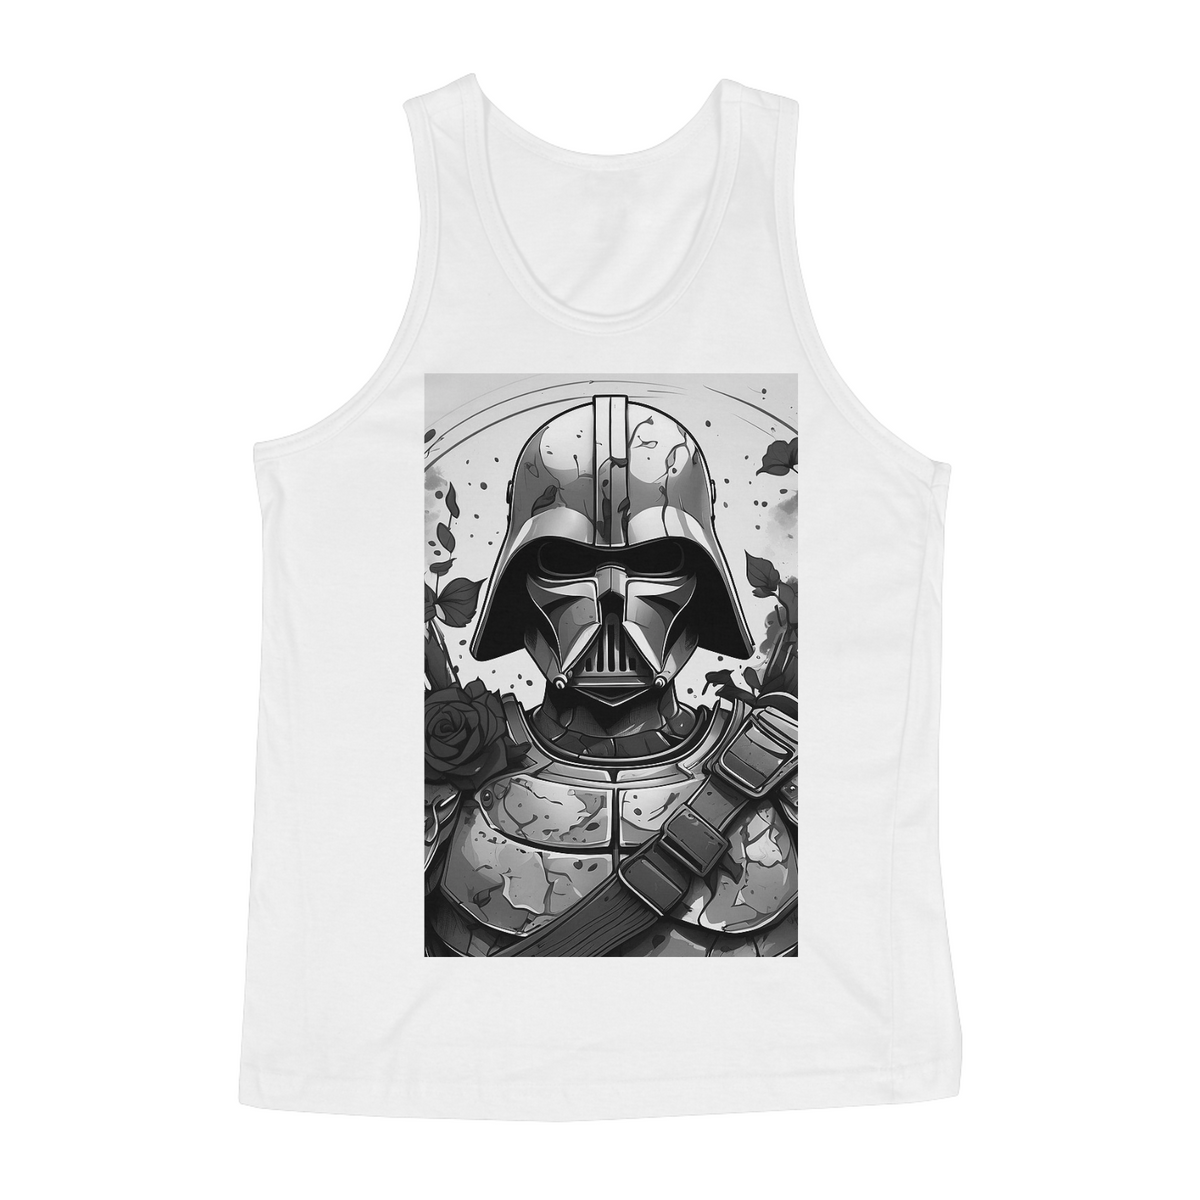 Nome do produto: Camiseta Star Wars (Darth Vader)